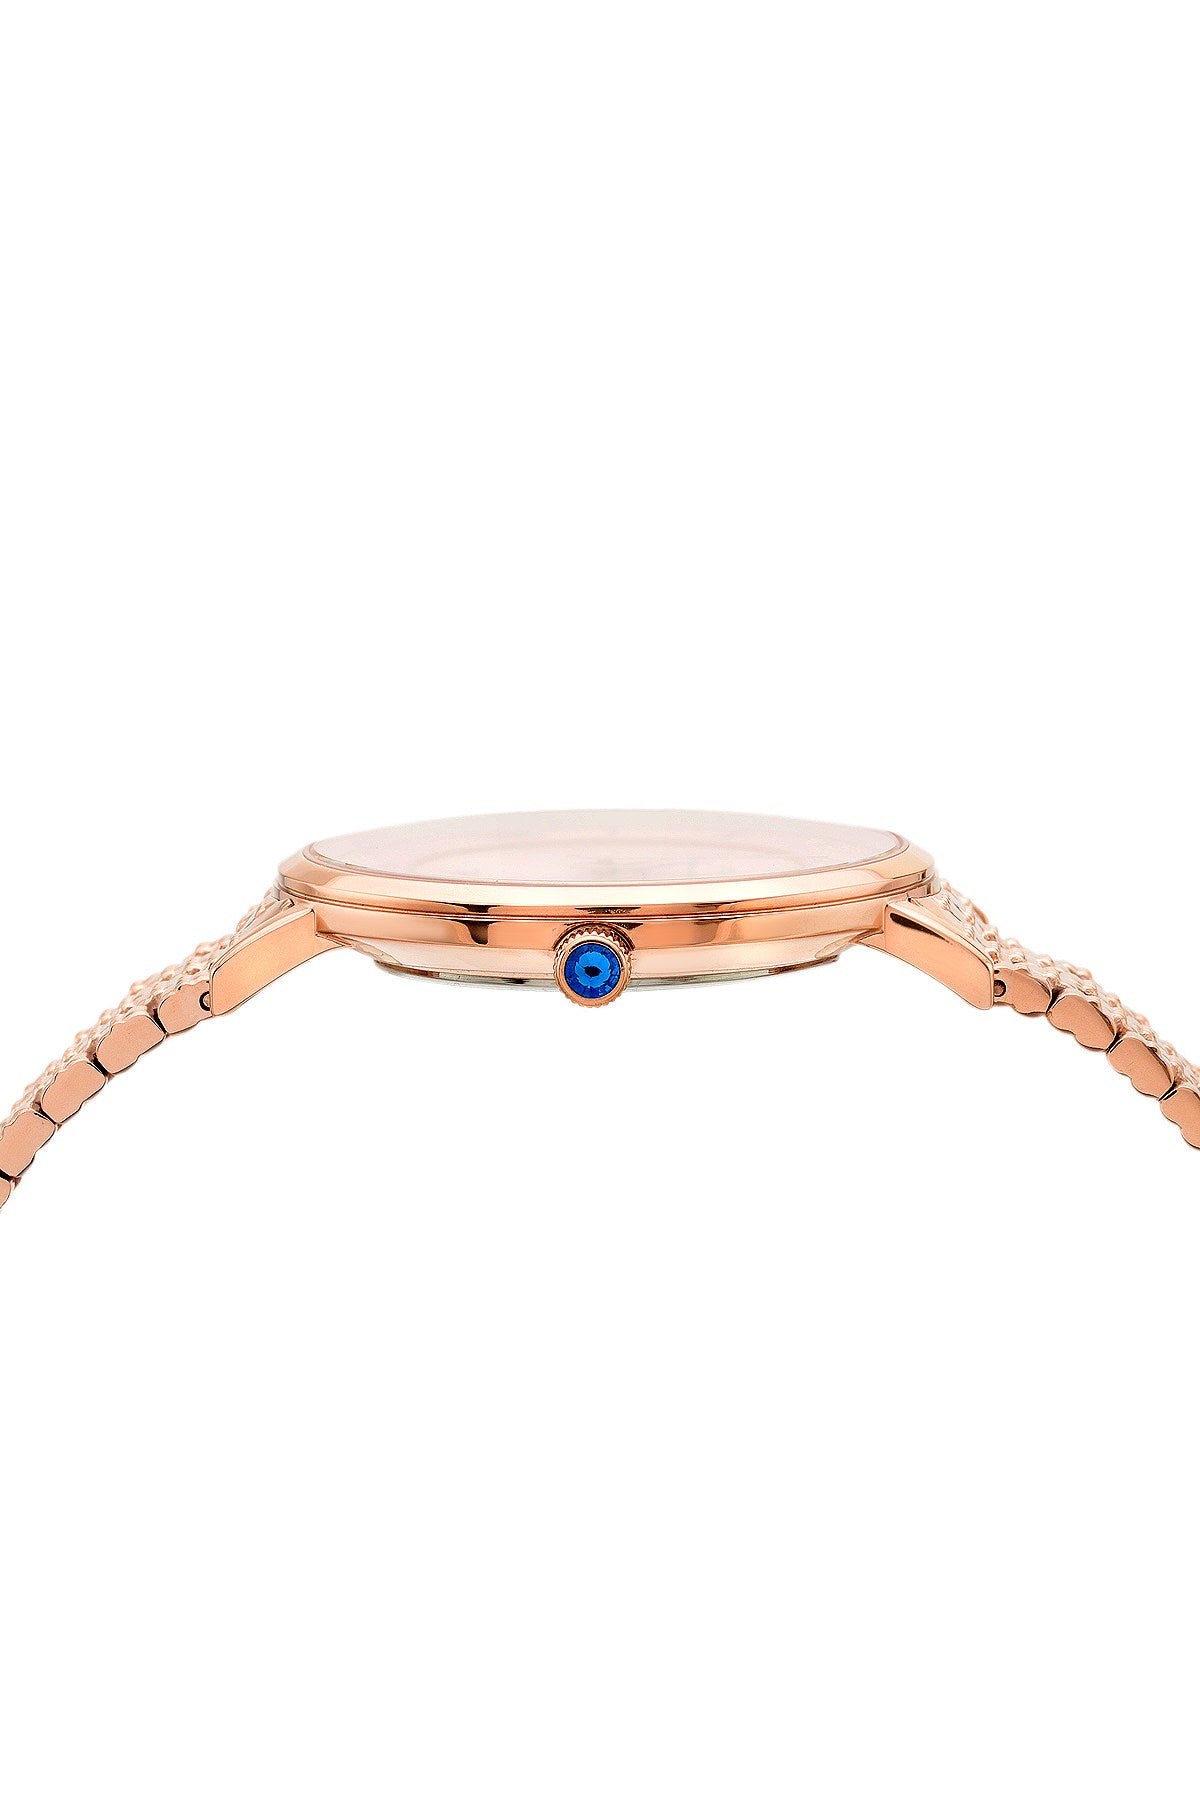 Porsamo Bleu Antonia luxury slim women's stainless steel watch, rose 431CANS